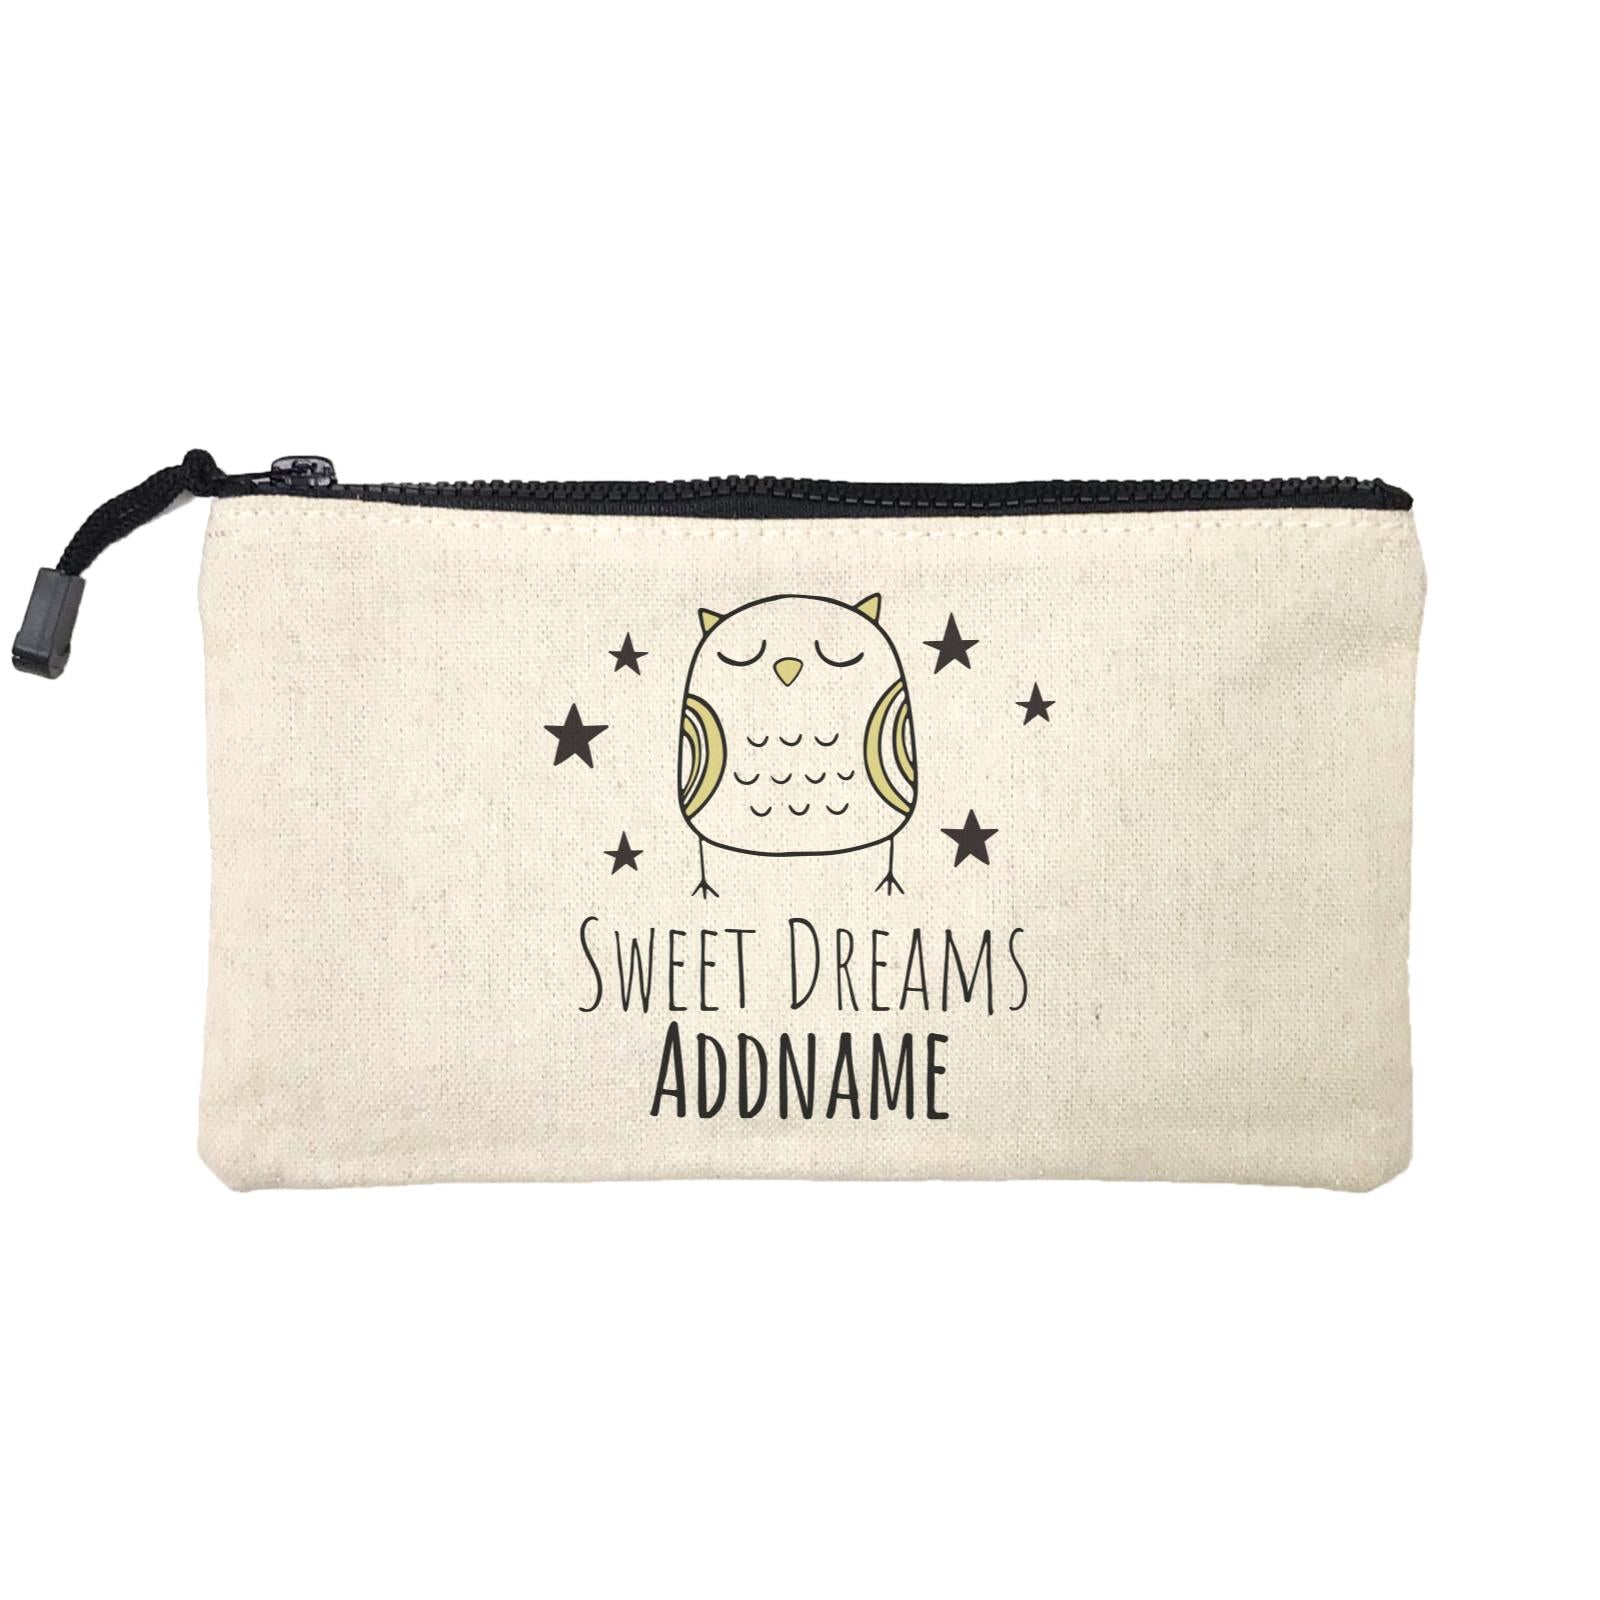 Drawn Newborn Element Sweet Dreams Owl Addname Mini Accessories Stationery Pouch